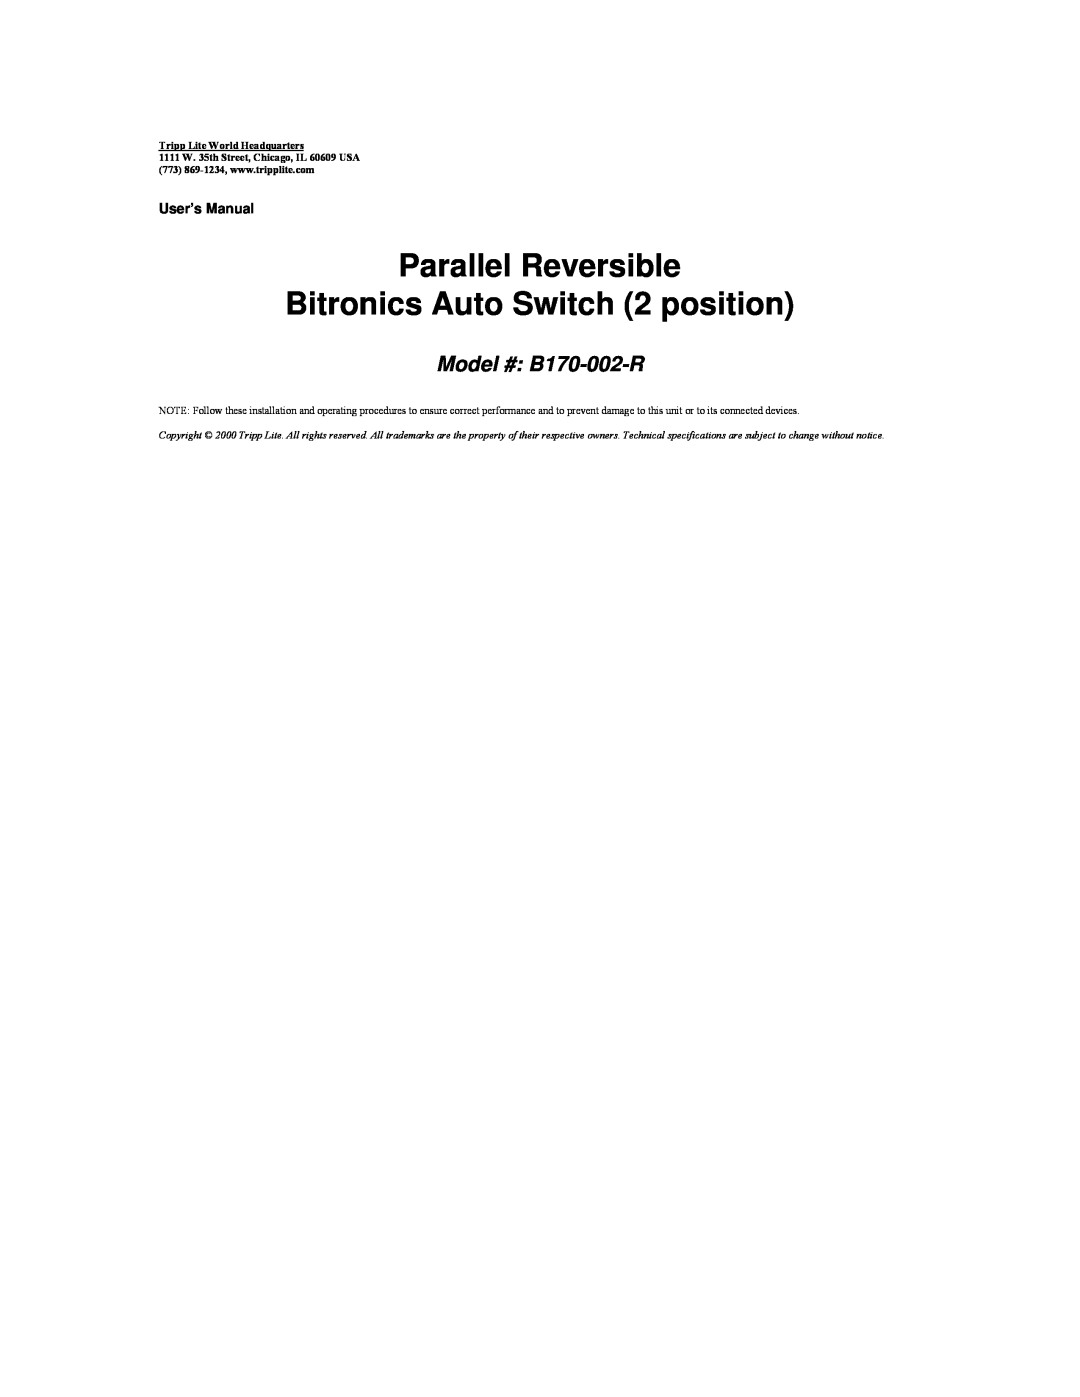 Tripp Lite user manual Parallel Reversible Bitronics Auto Switch 2 position, Model # B170-002-R, User’s Manual 